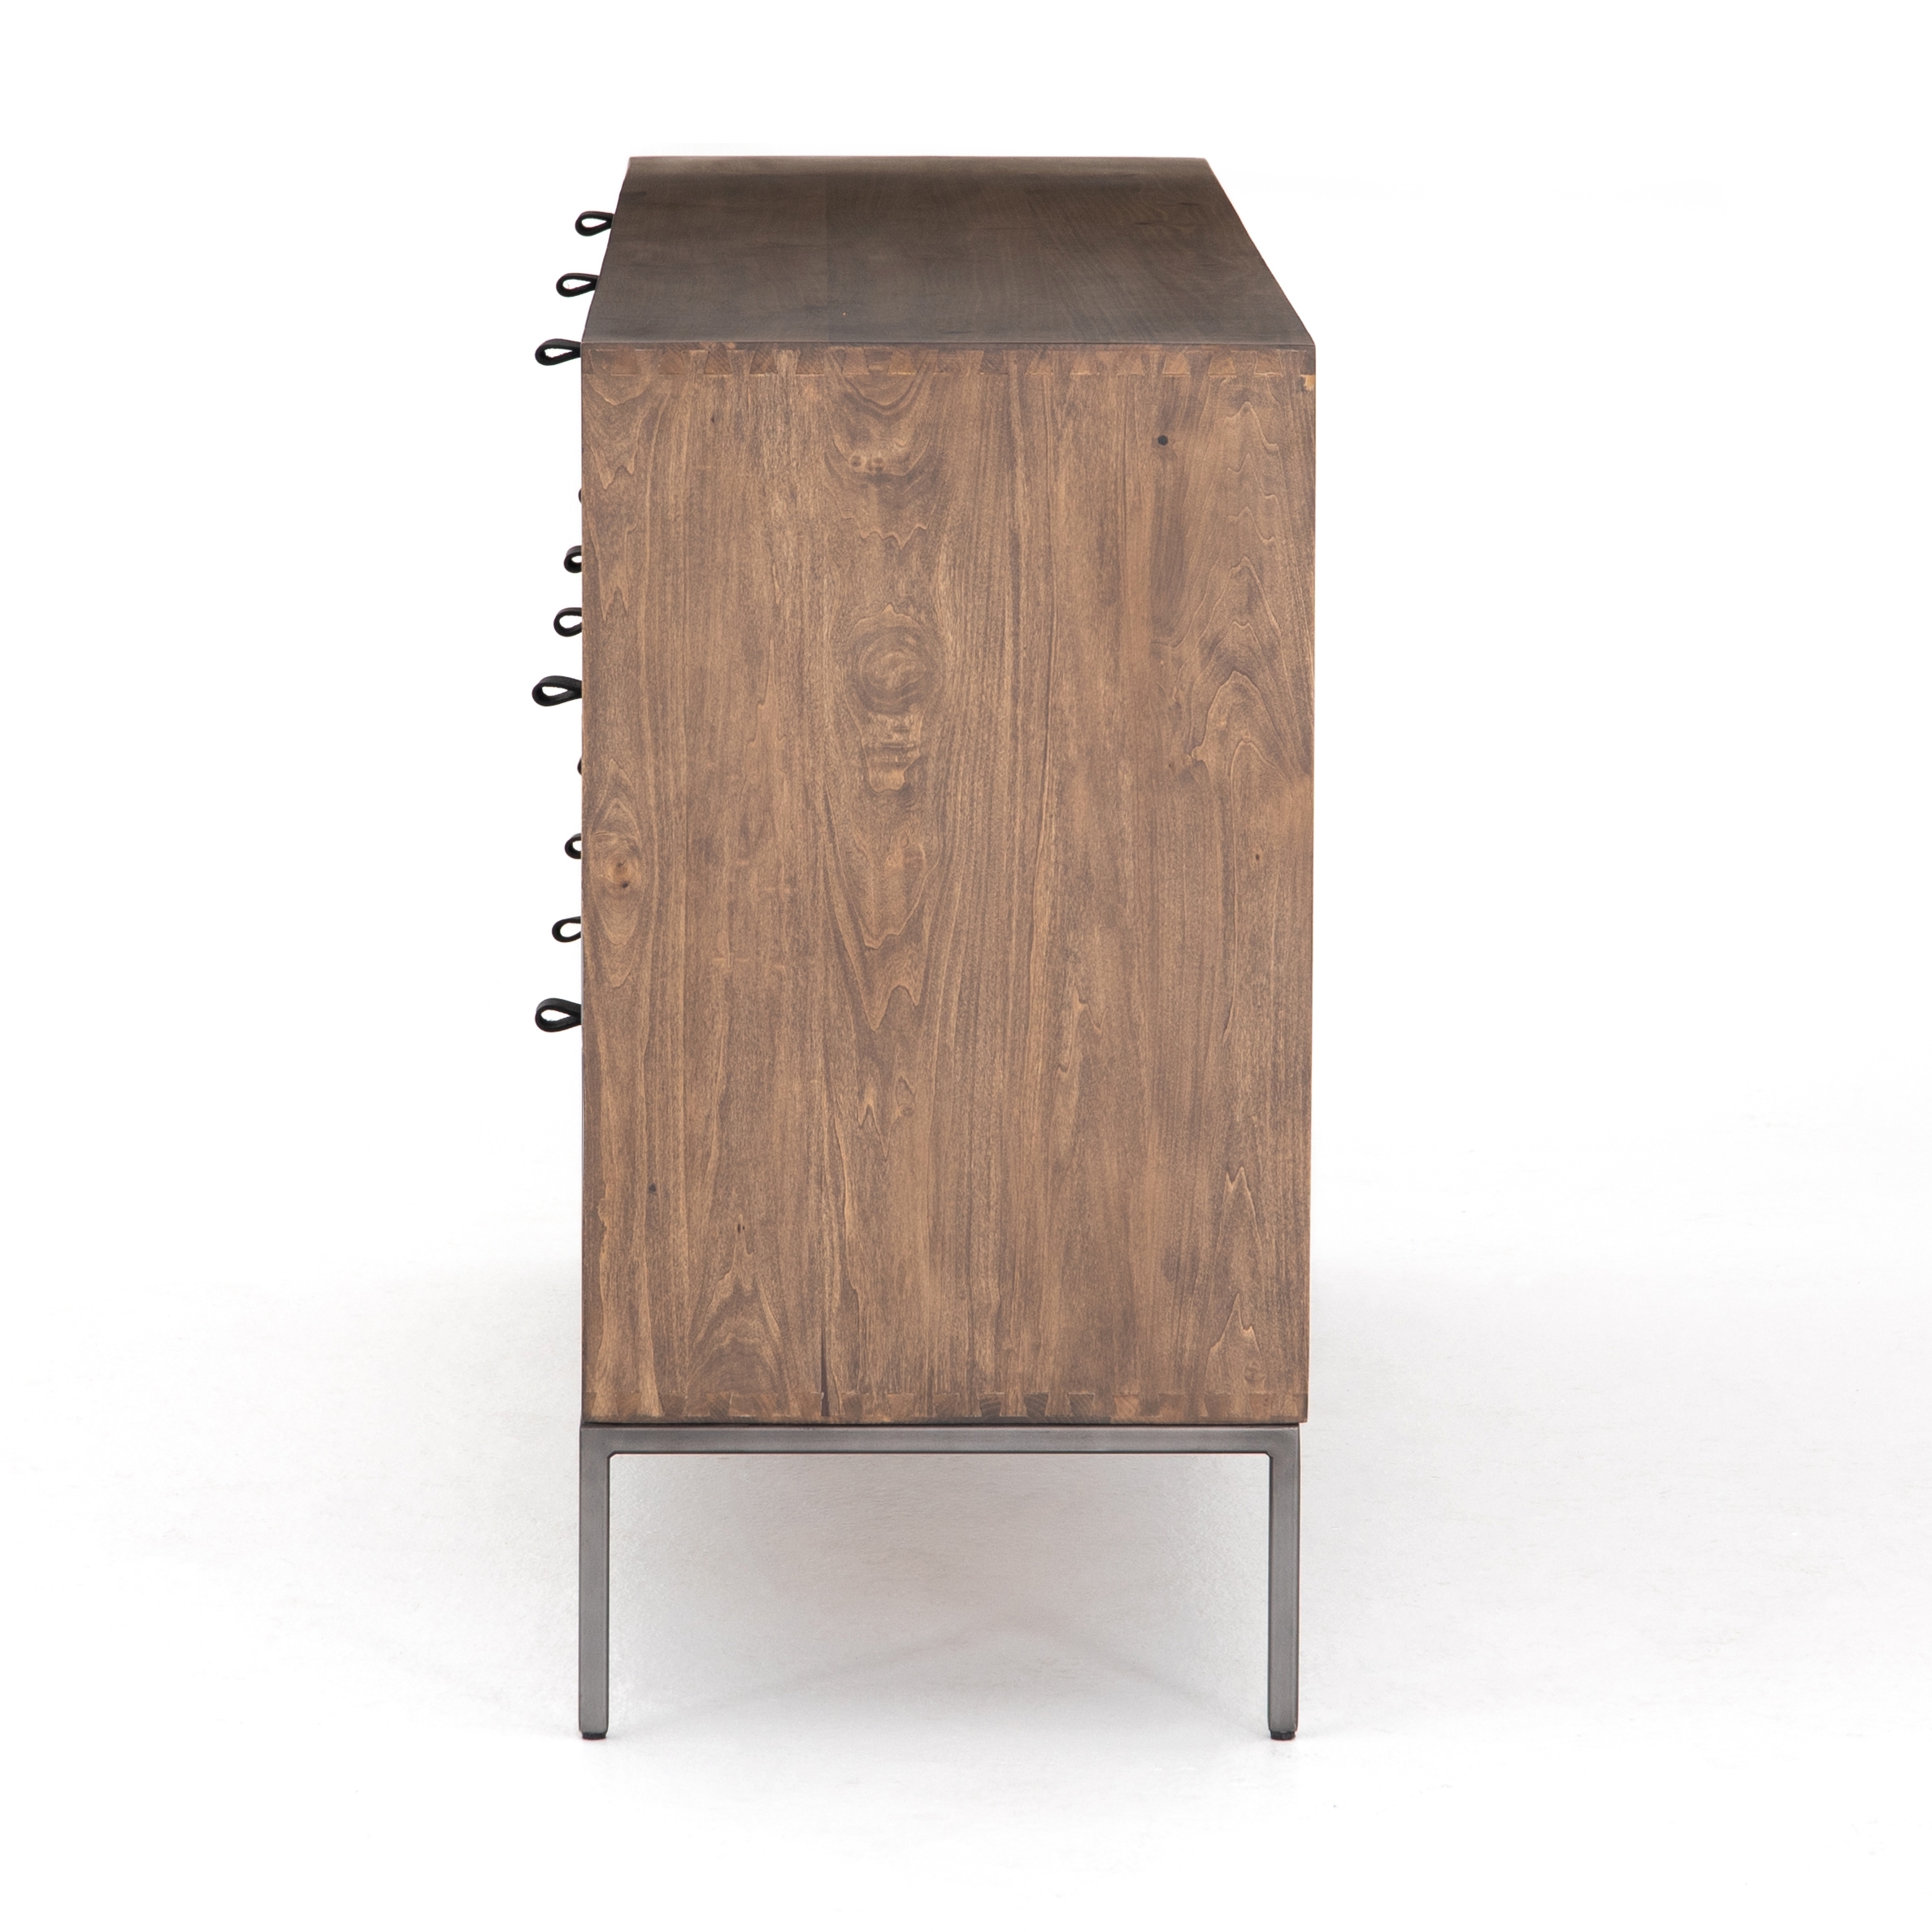 Trey 7 Drawer Dresser - Auburn Poplar - Image 5